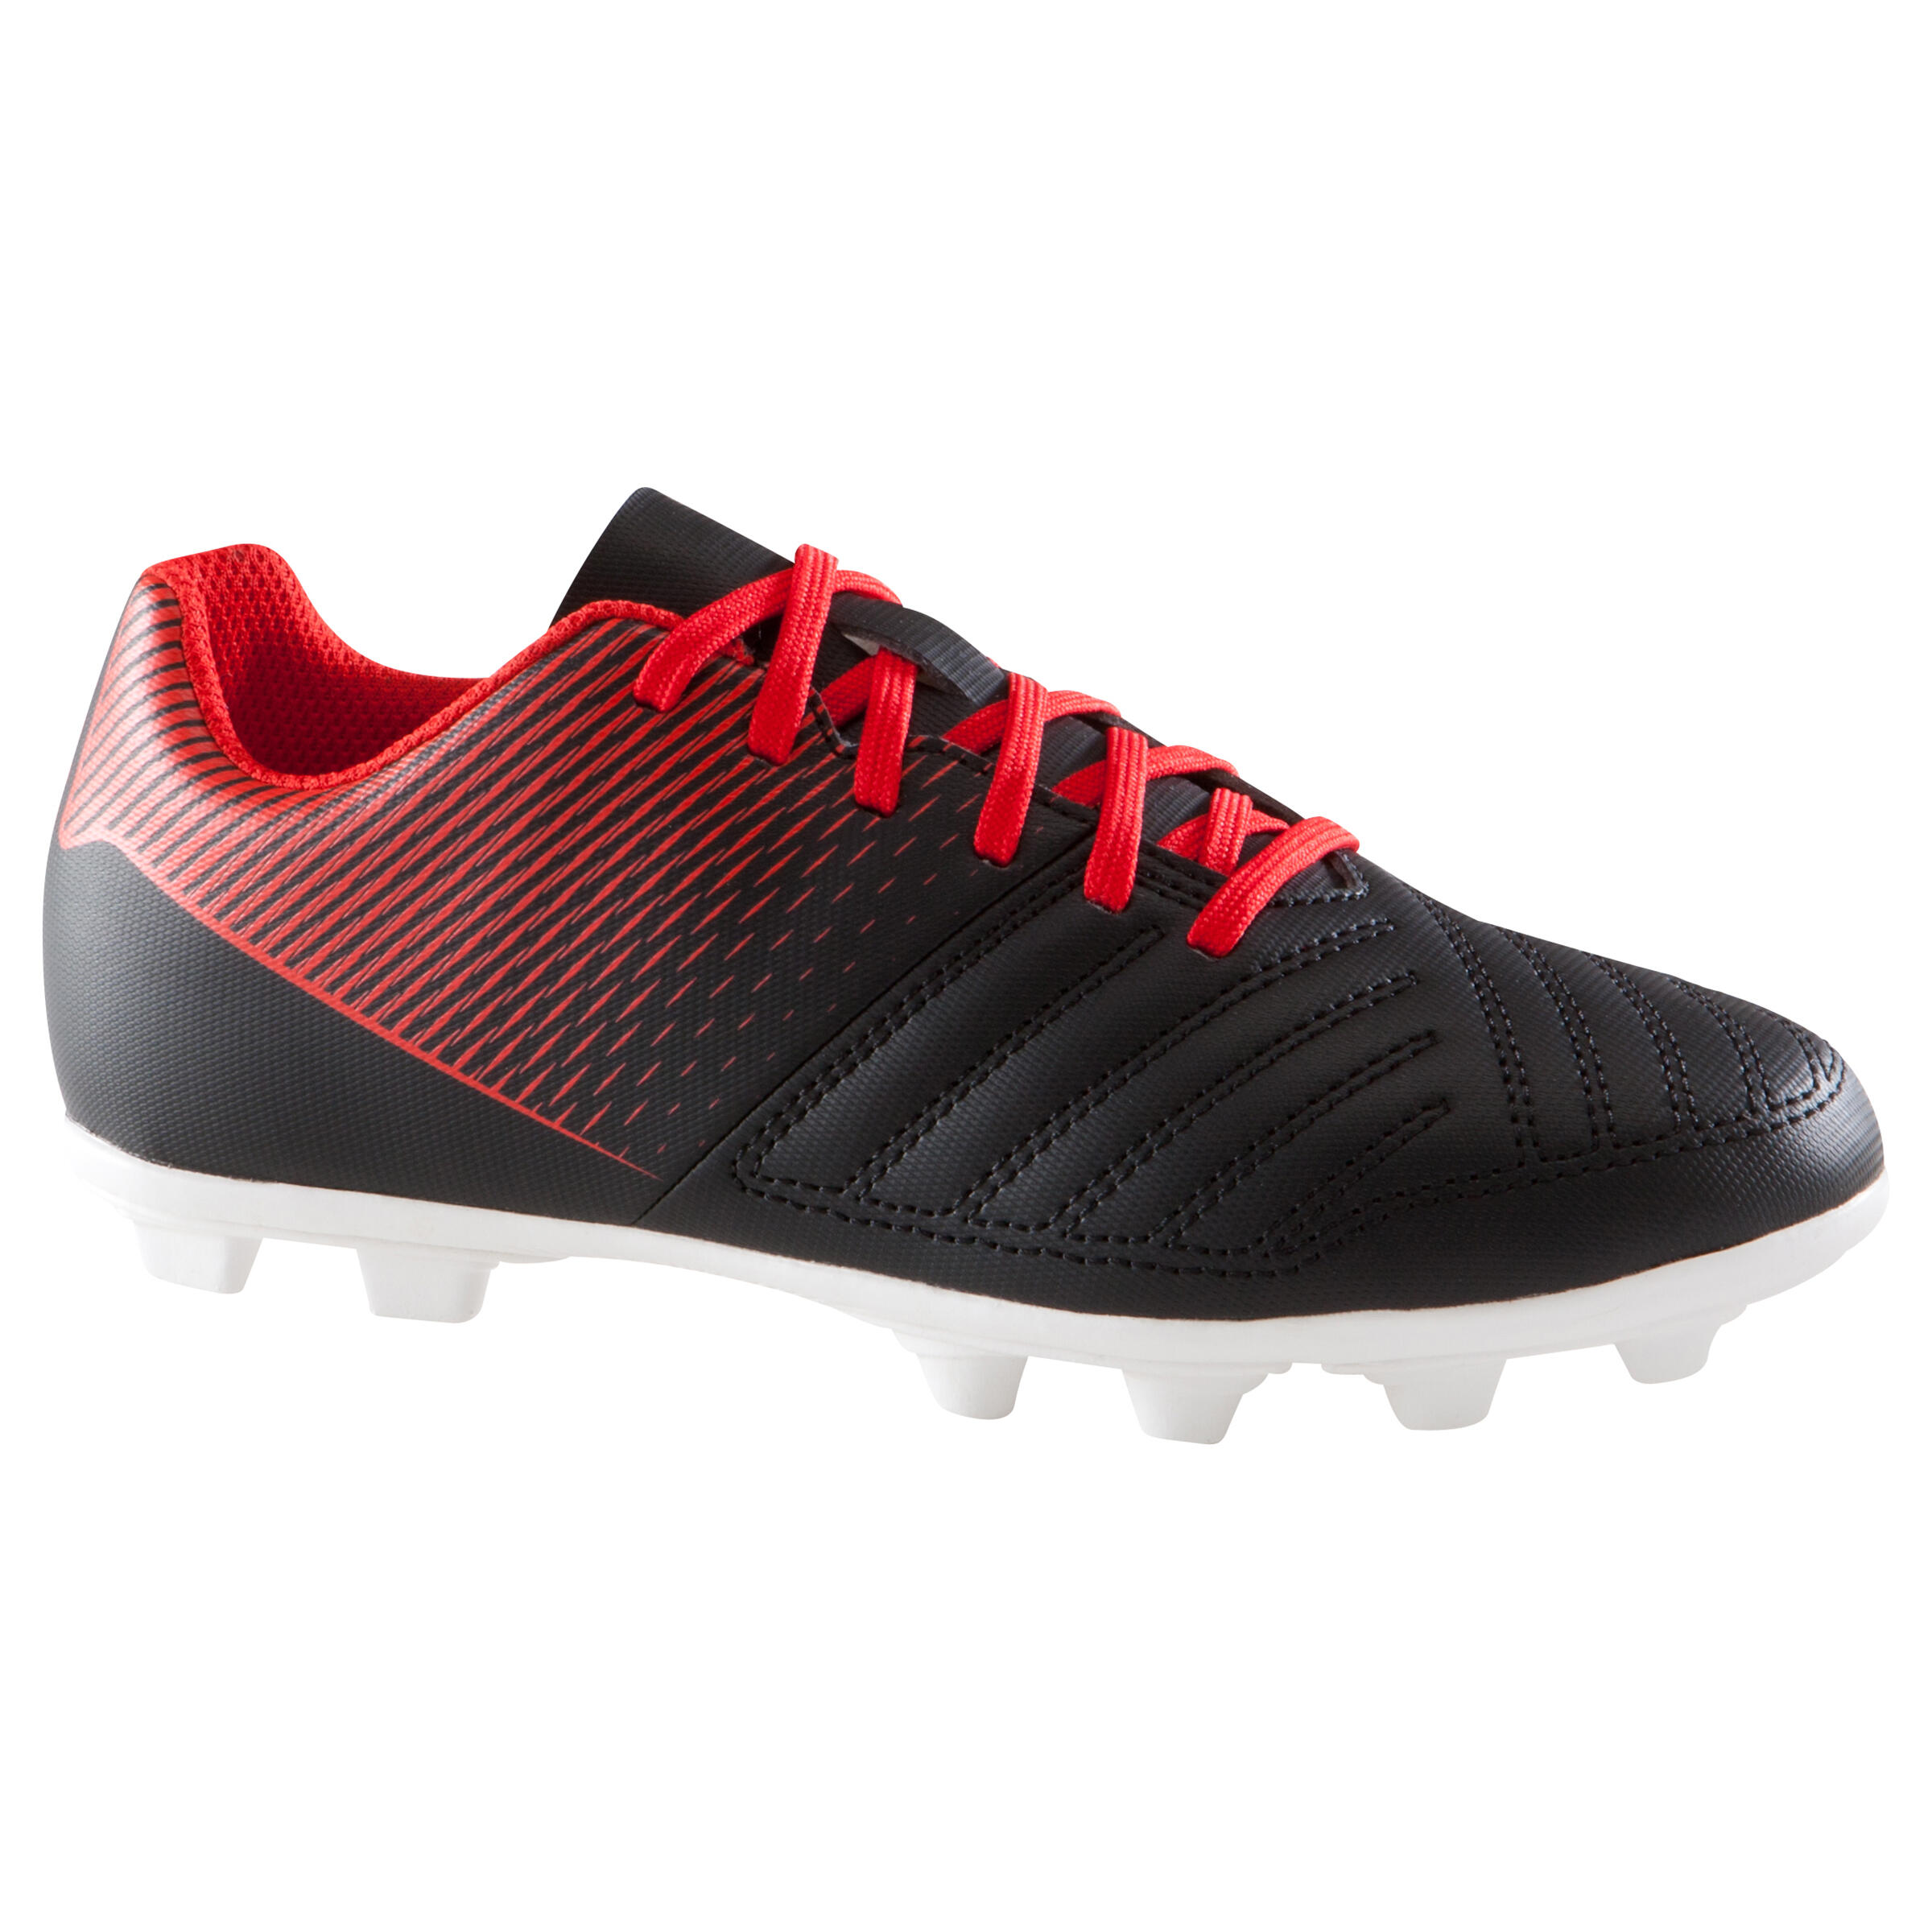 Kipsta Football Shoes - Football Boots 